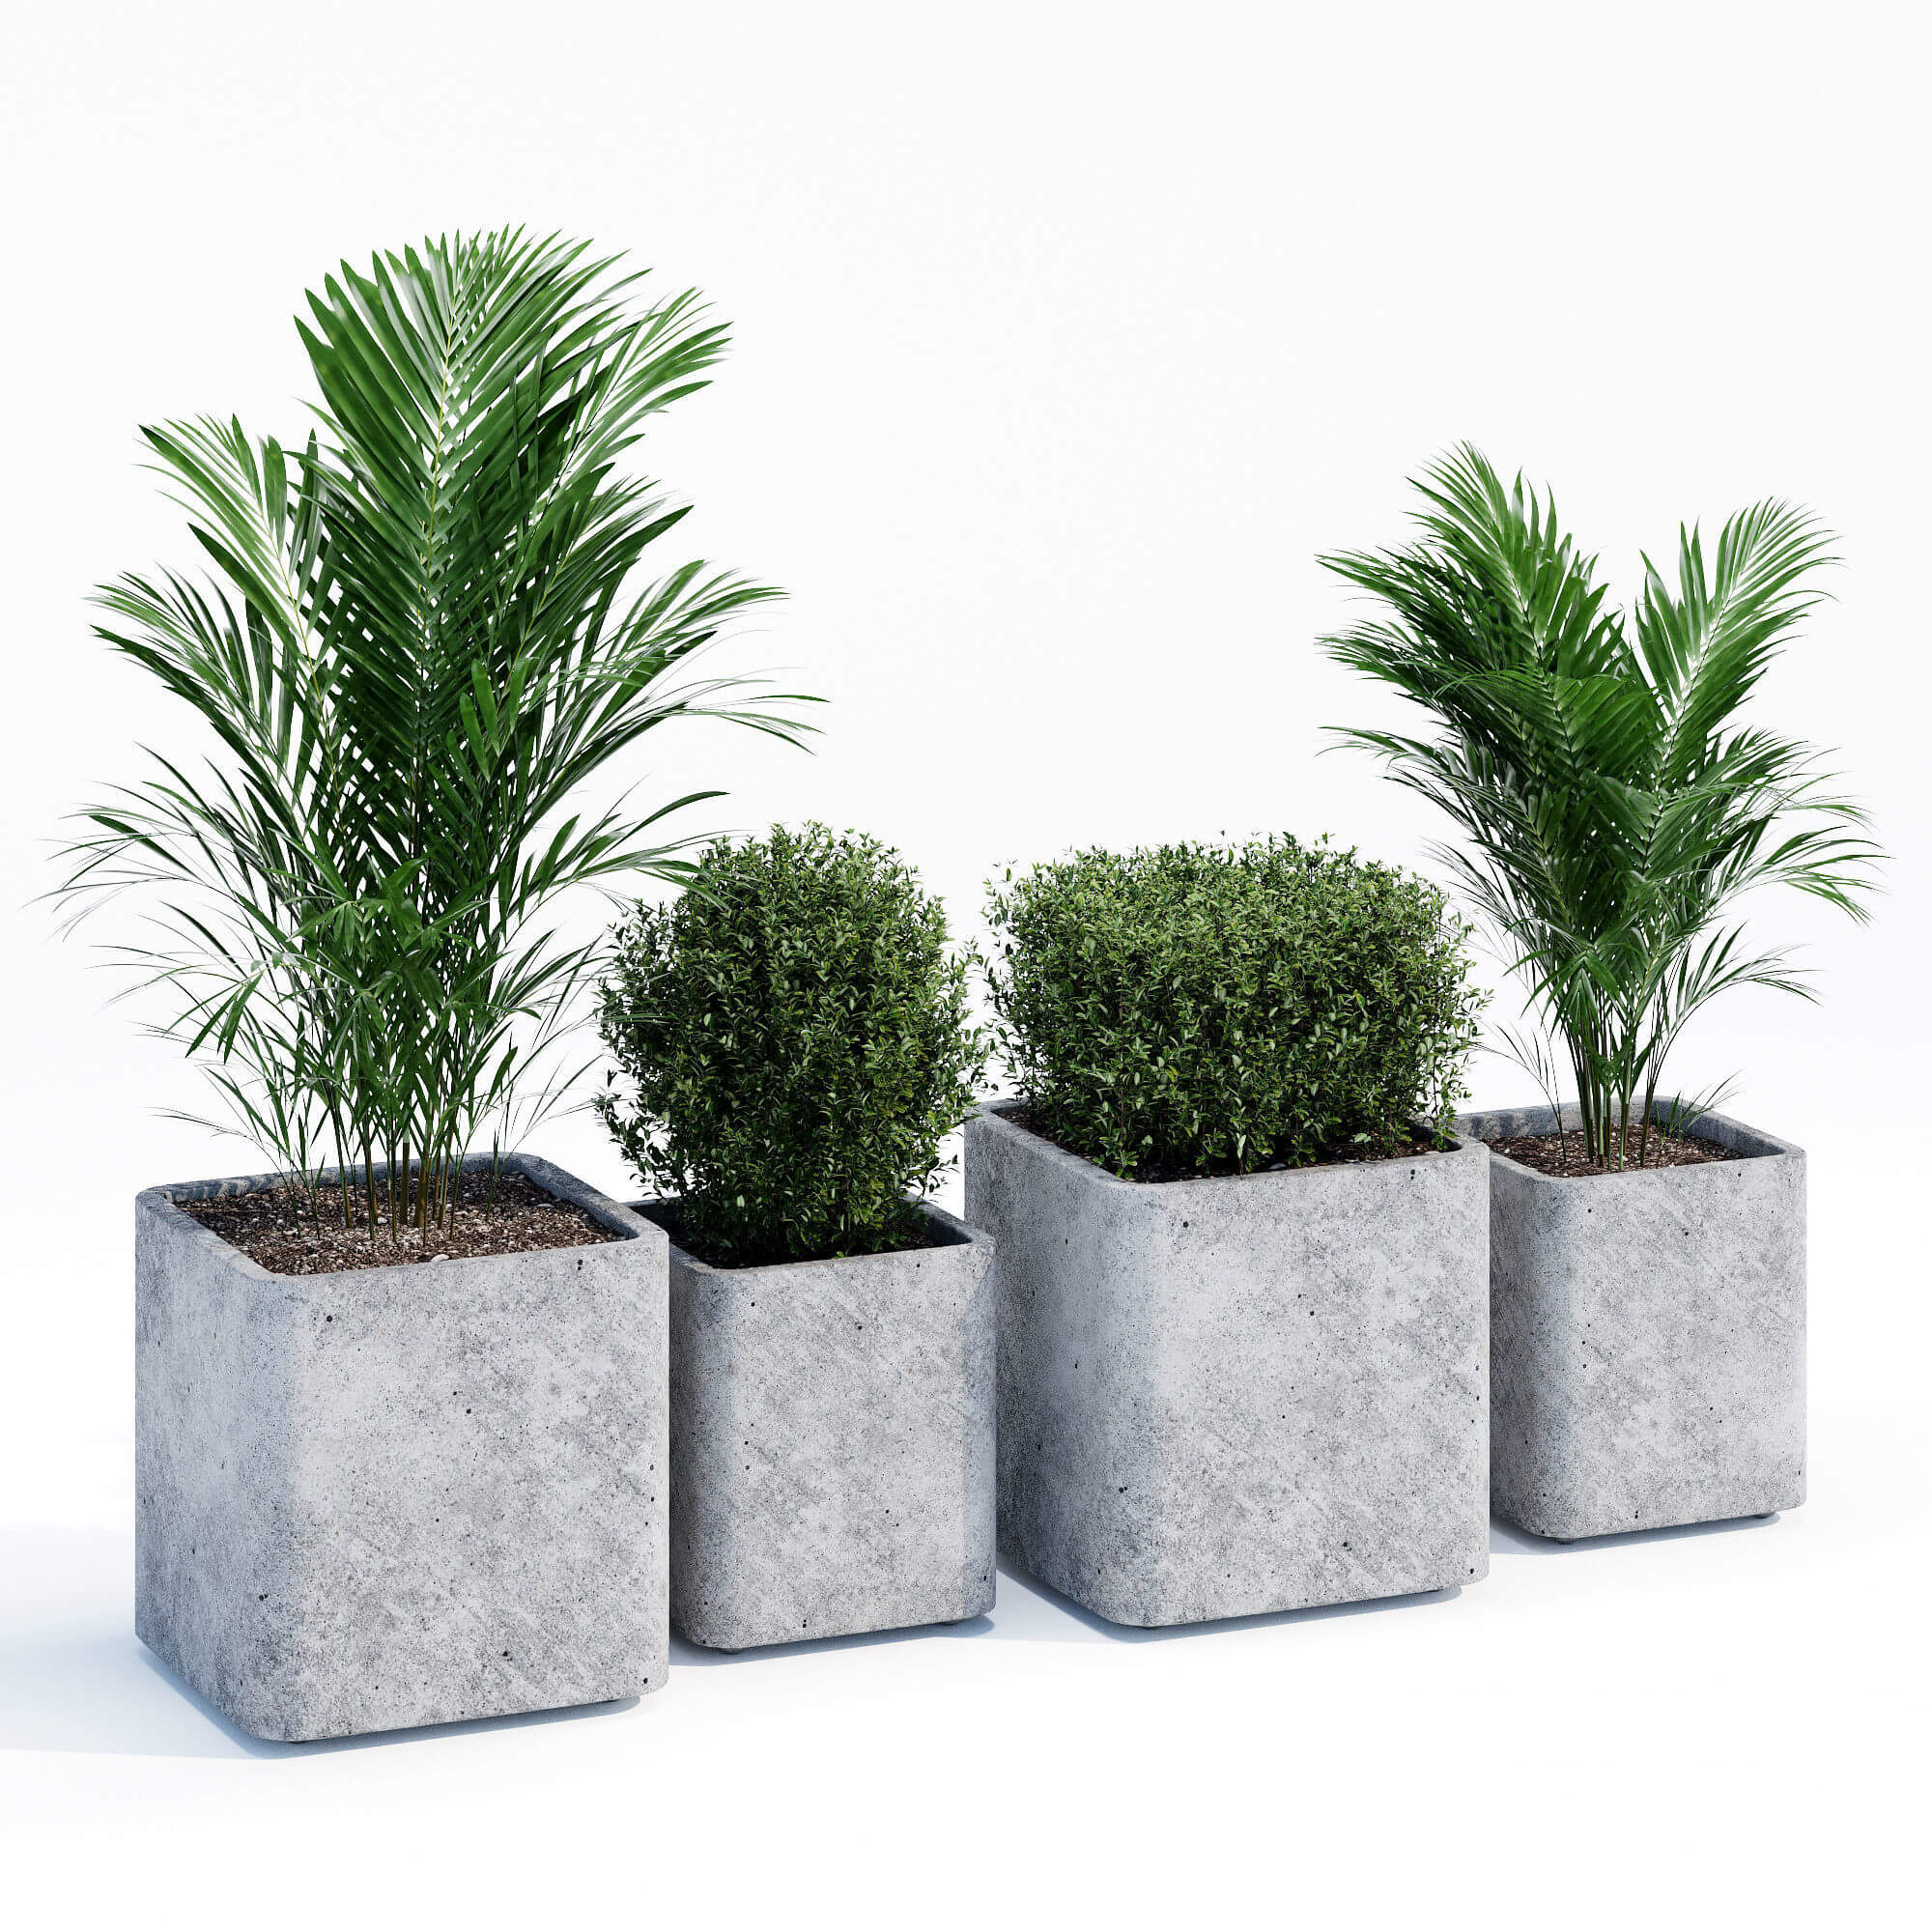 Conc方形绿植花坛3D模型（OBJ,MAX）